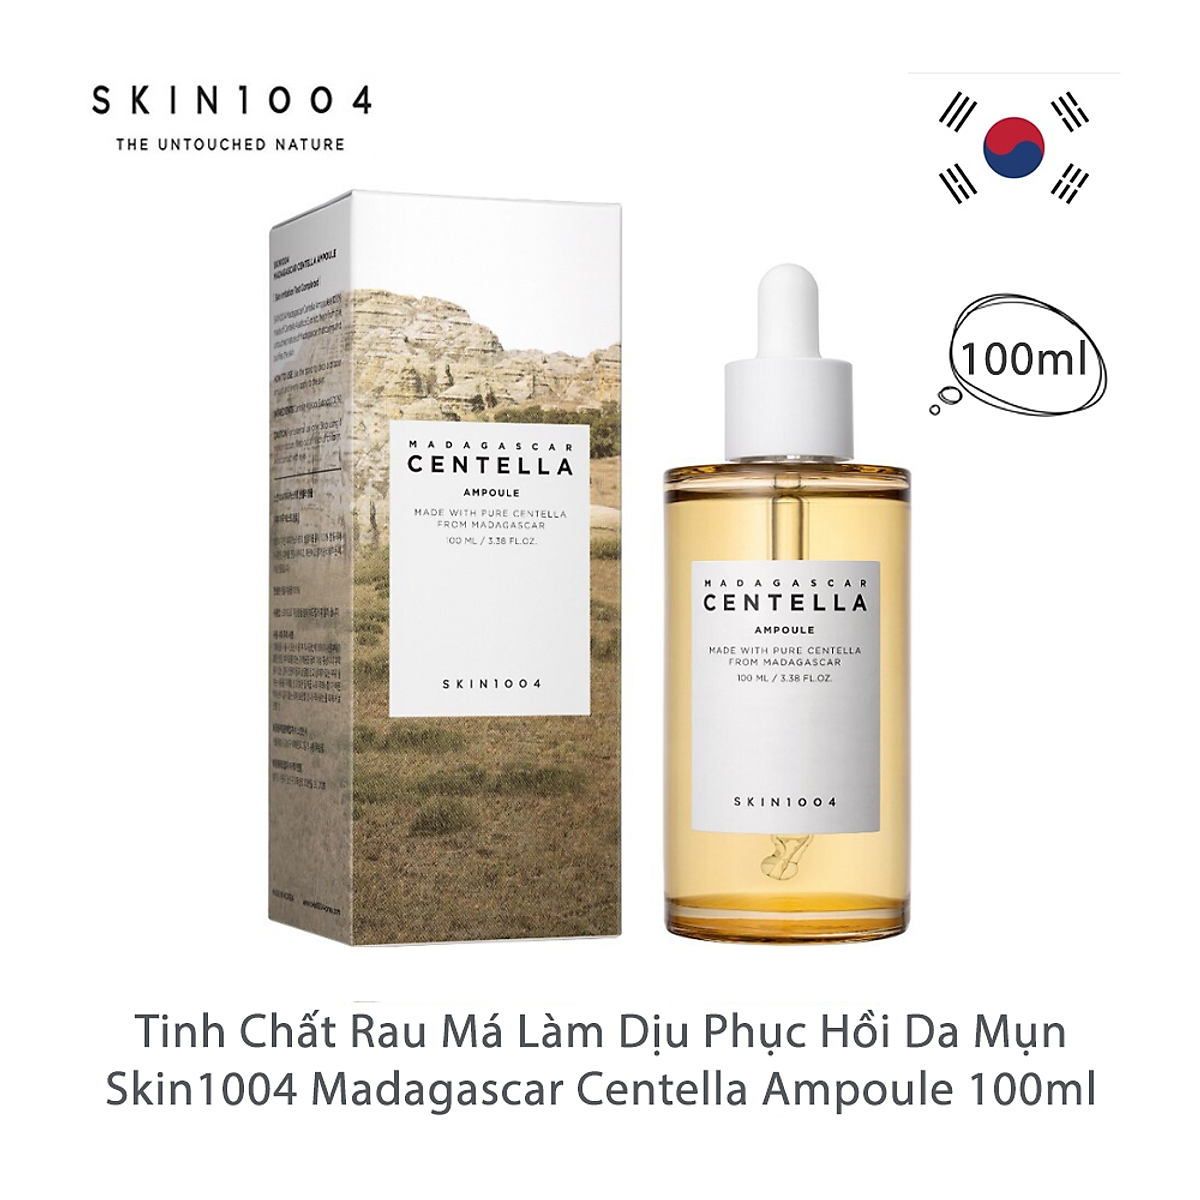 Tinh Chất cho da nhạy cảm Skin1004 Madagascar Centella Asiatica Ampoule 100ml